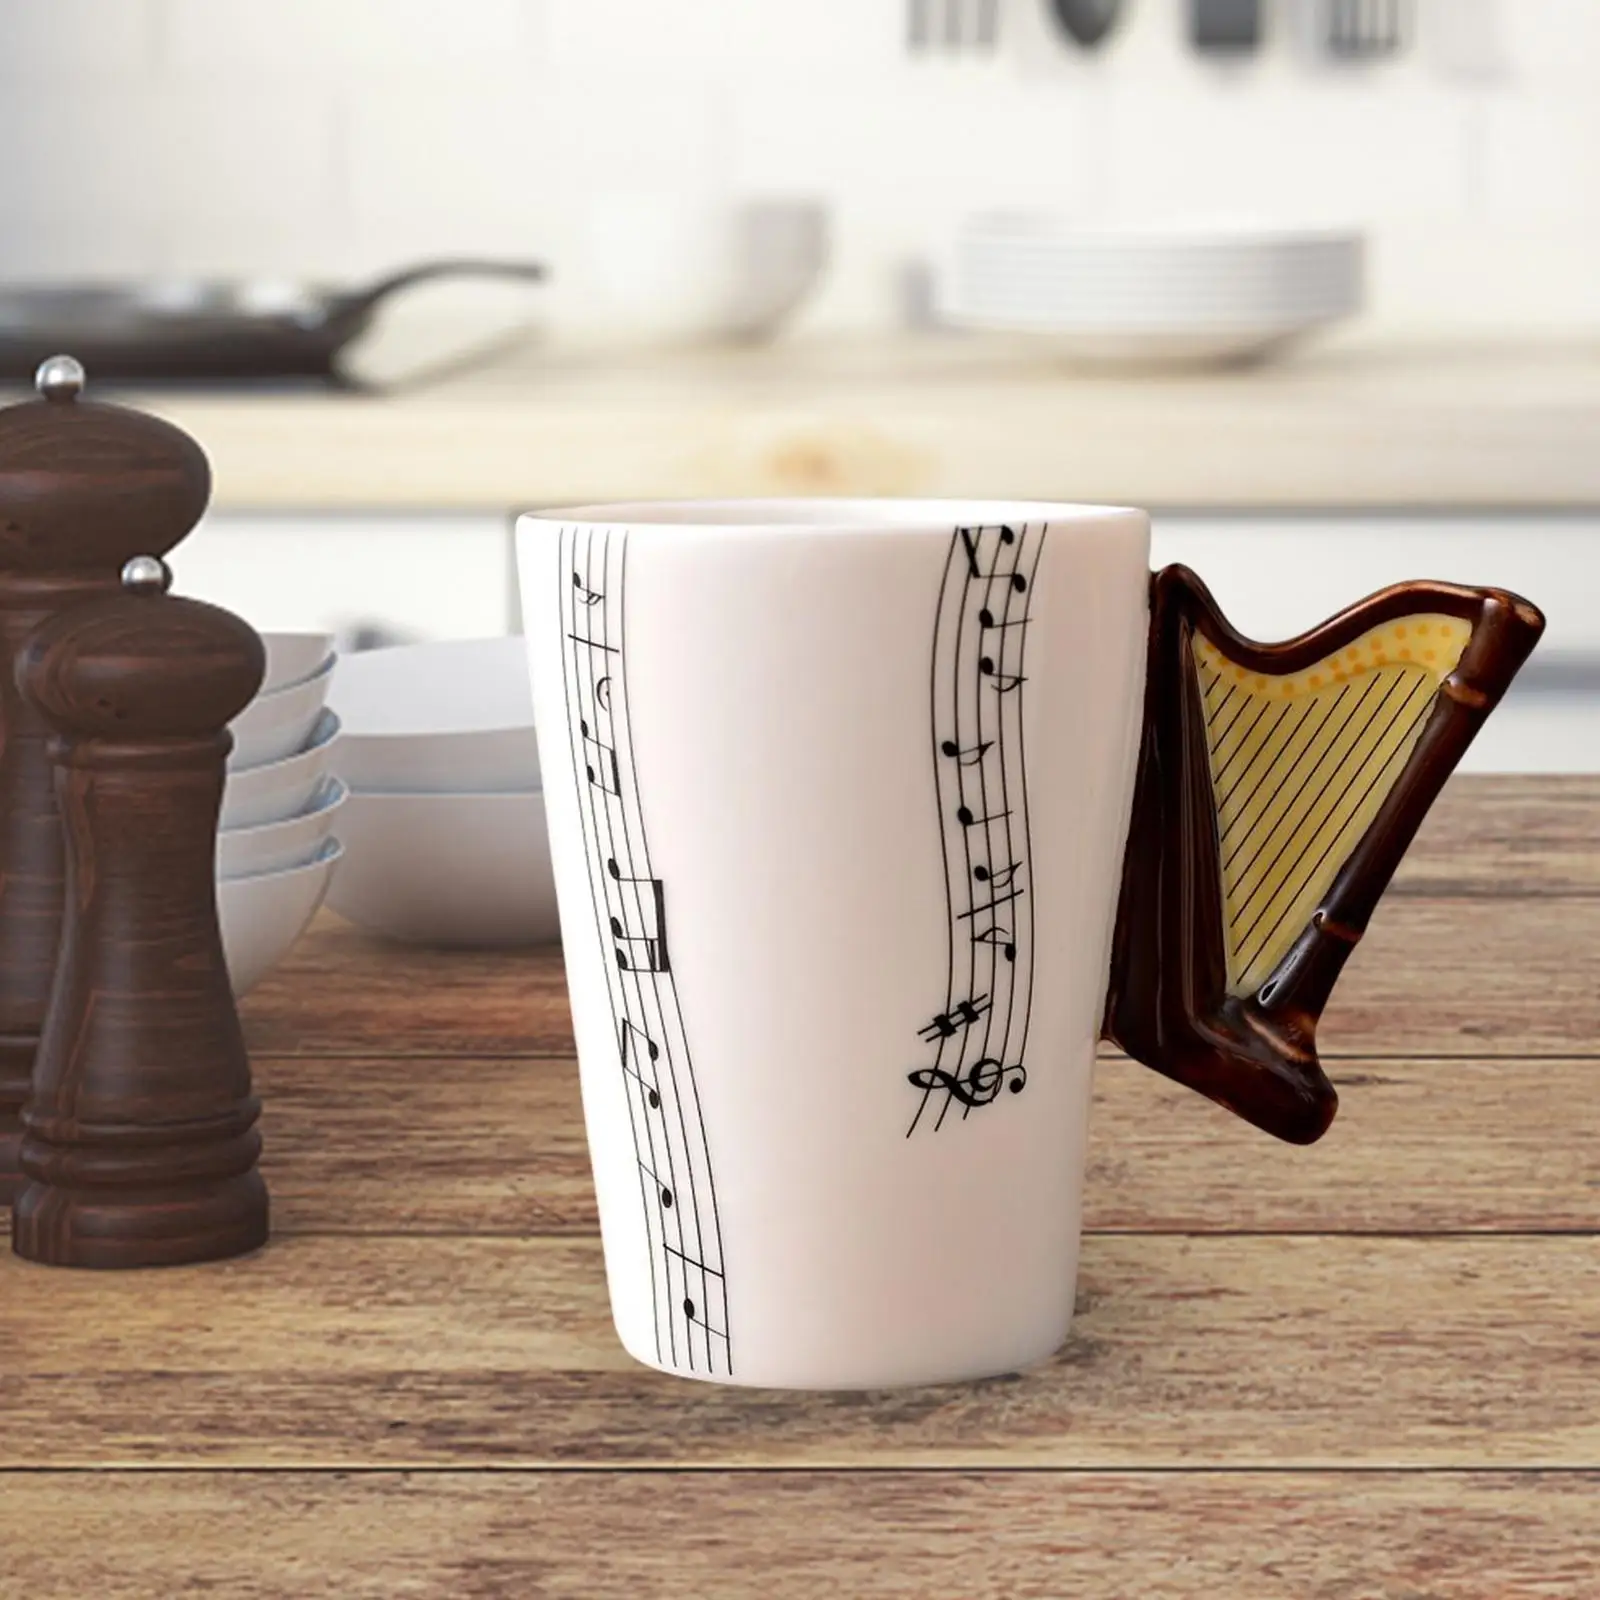 Ceramic Tea Mug Music Mug Teaware Mug Drinking Cup Harps Shape Coffee Cup Porcelain Mugs for Breakfast yogurt Milk Travel